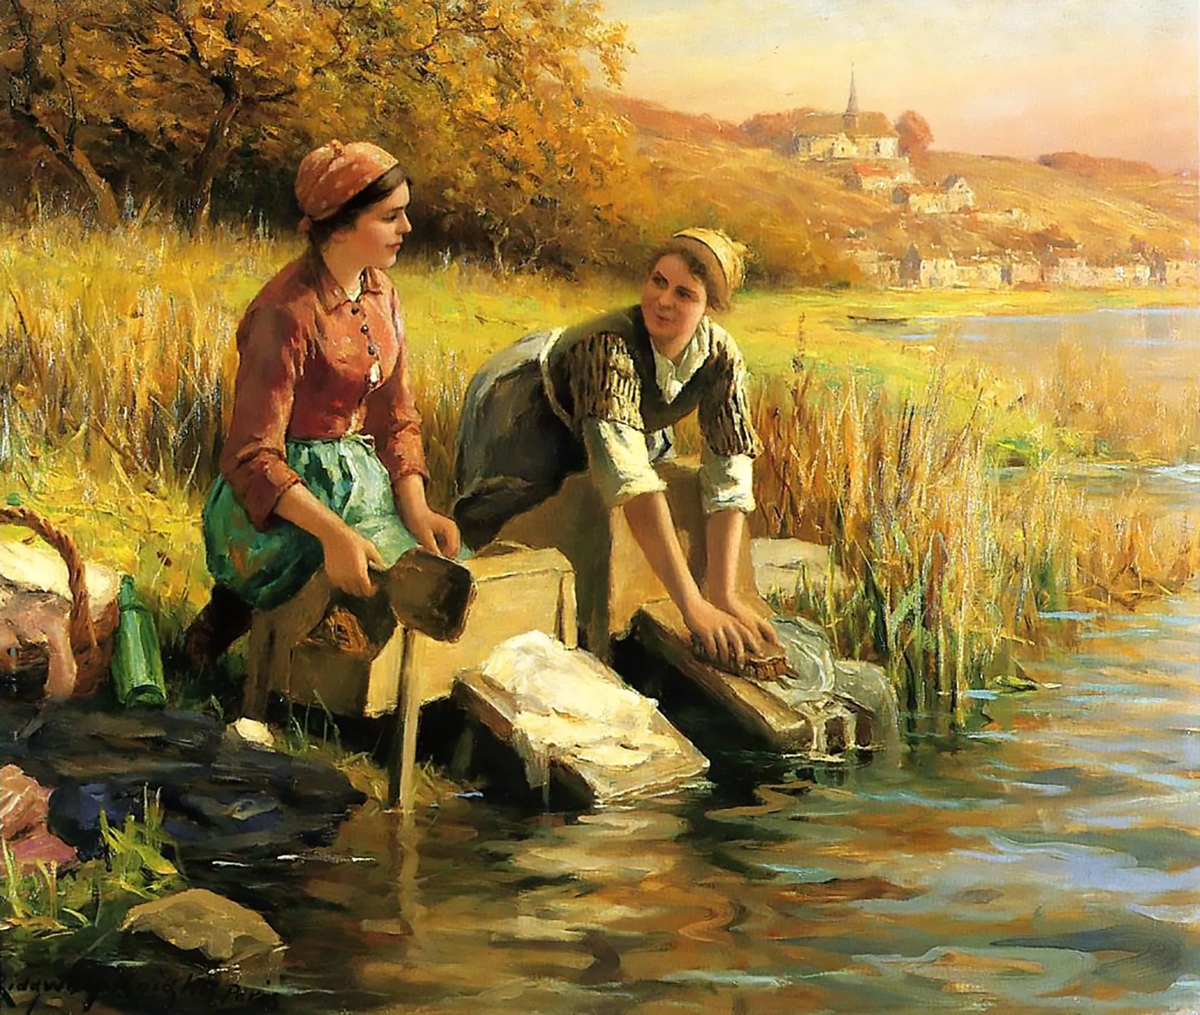 Женщины стирают на речке. Daniel Ridgway Knight картины. Daniel Ridgway Knight (1839-1924). Дэниел Риджуэй Найт (Daniel Ridgway Knight), 1839-1924. Картины. Daniel Ridgway Knight дочь рыбака.